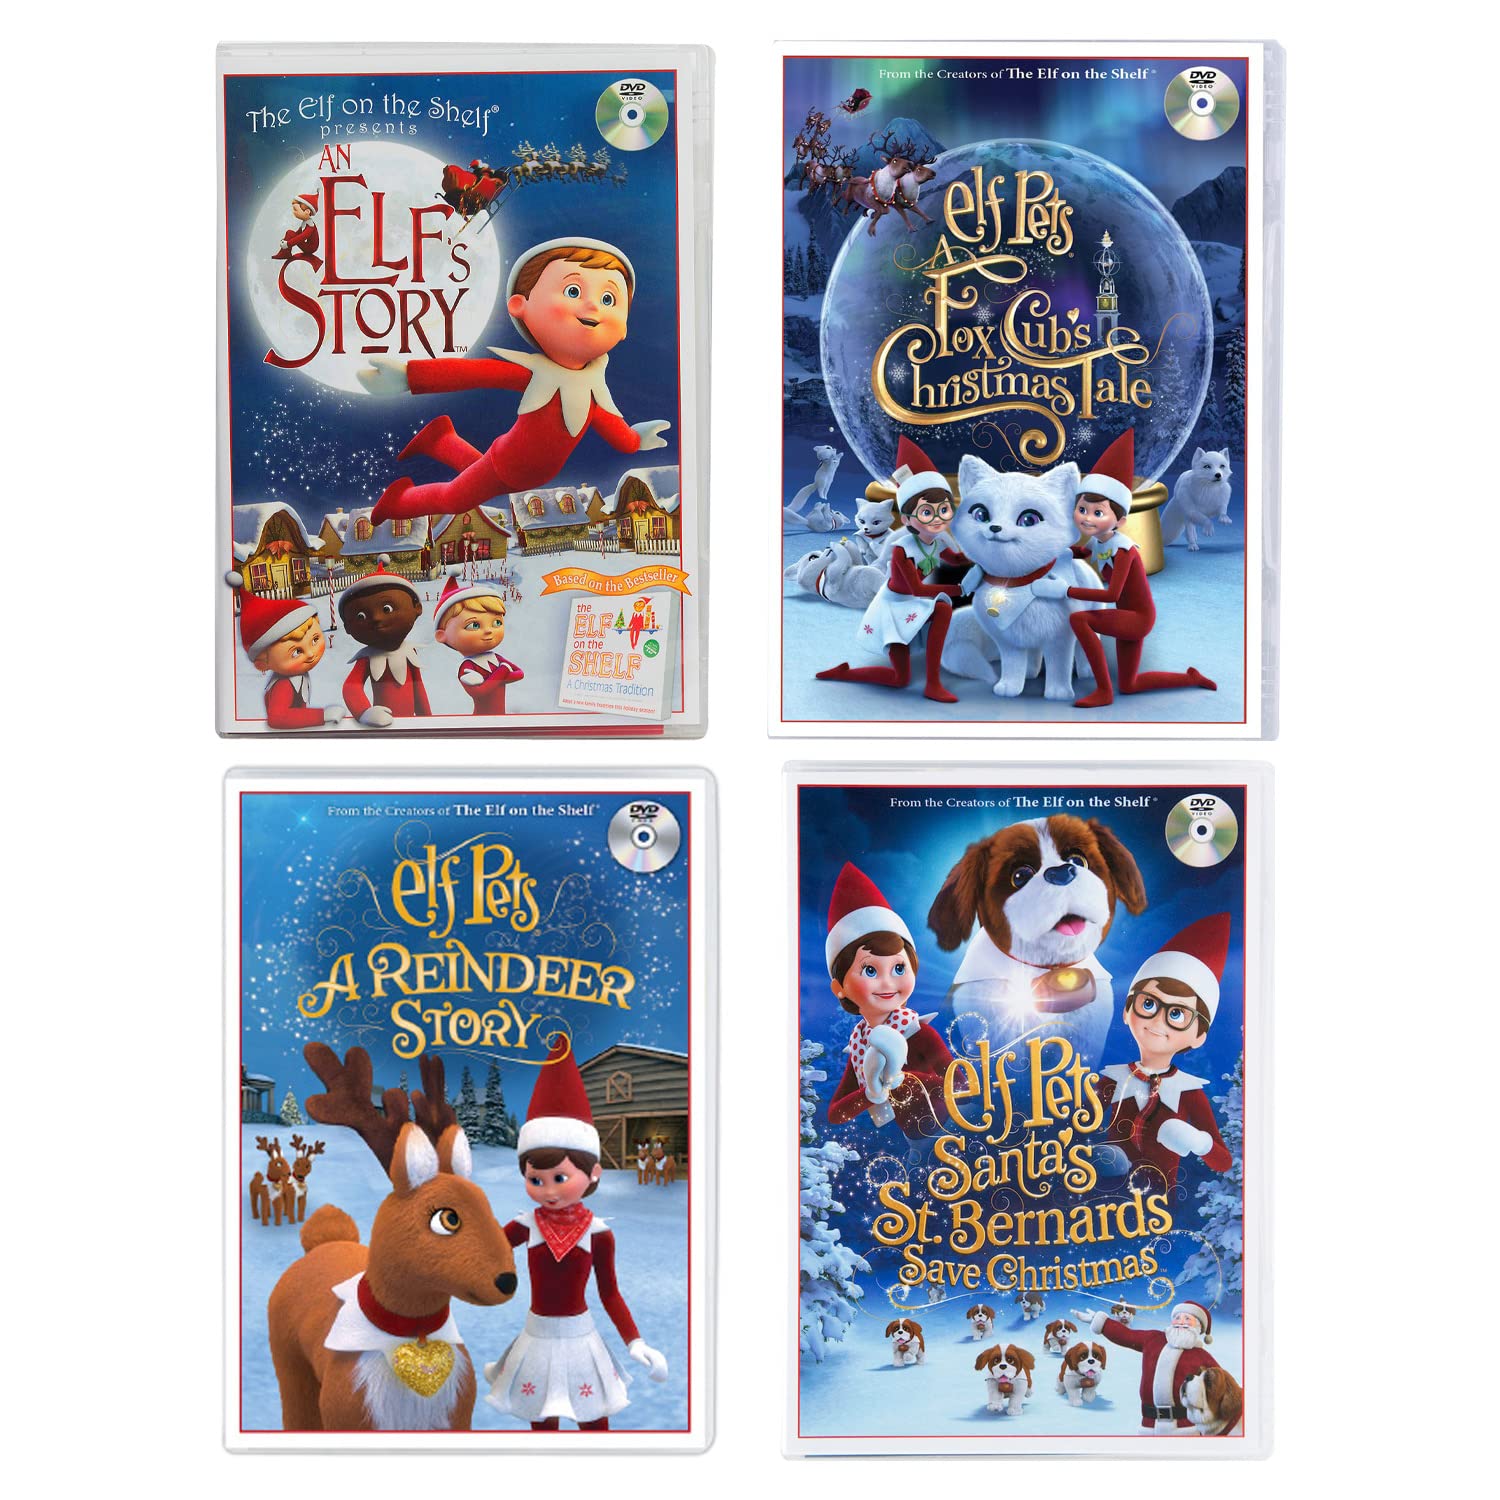 The Elf on the Shelf Animated DVD Movie Complete Pack: Santa's Reindeer Rescue, Santa's St. Bernards Save Christmas, A Fox Cub's Tale, an Elf's Story & Joy Bag